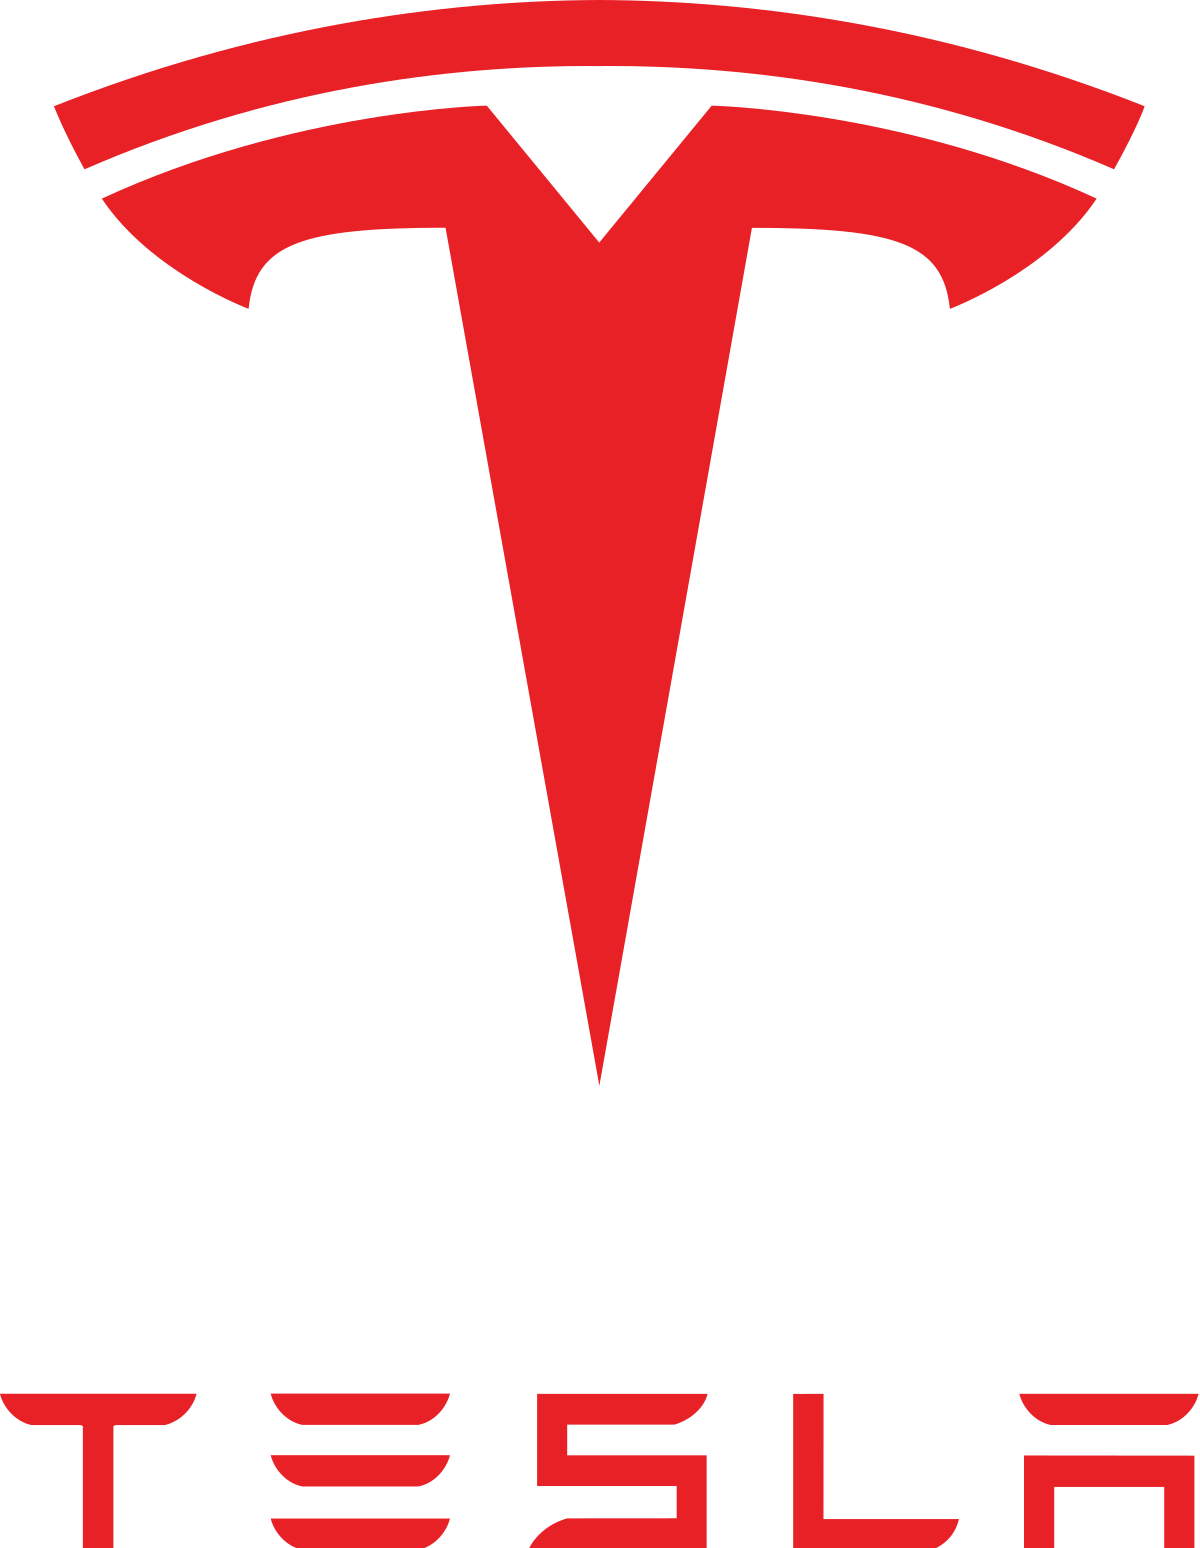 File:Ford logo flat.svg - Wikipedia